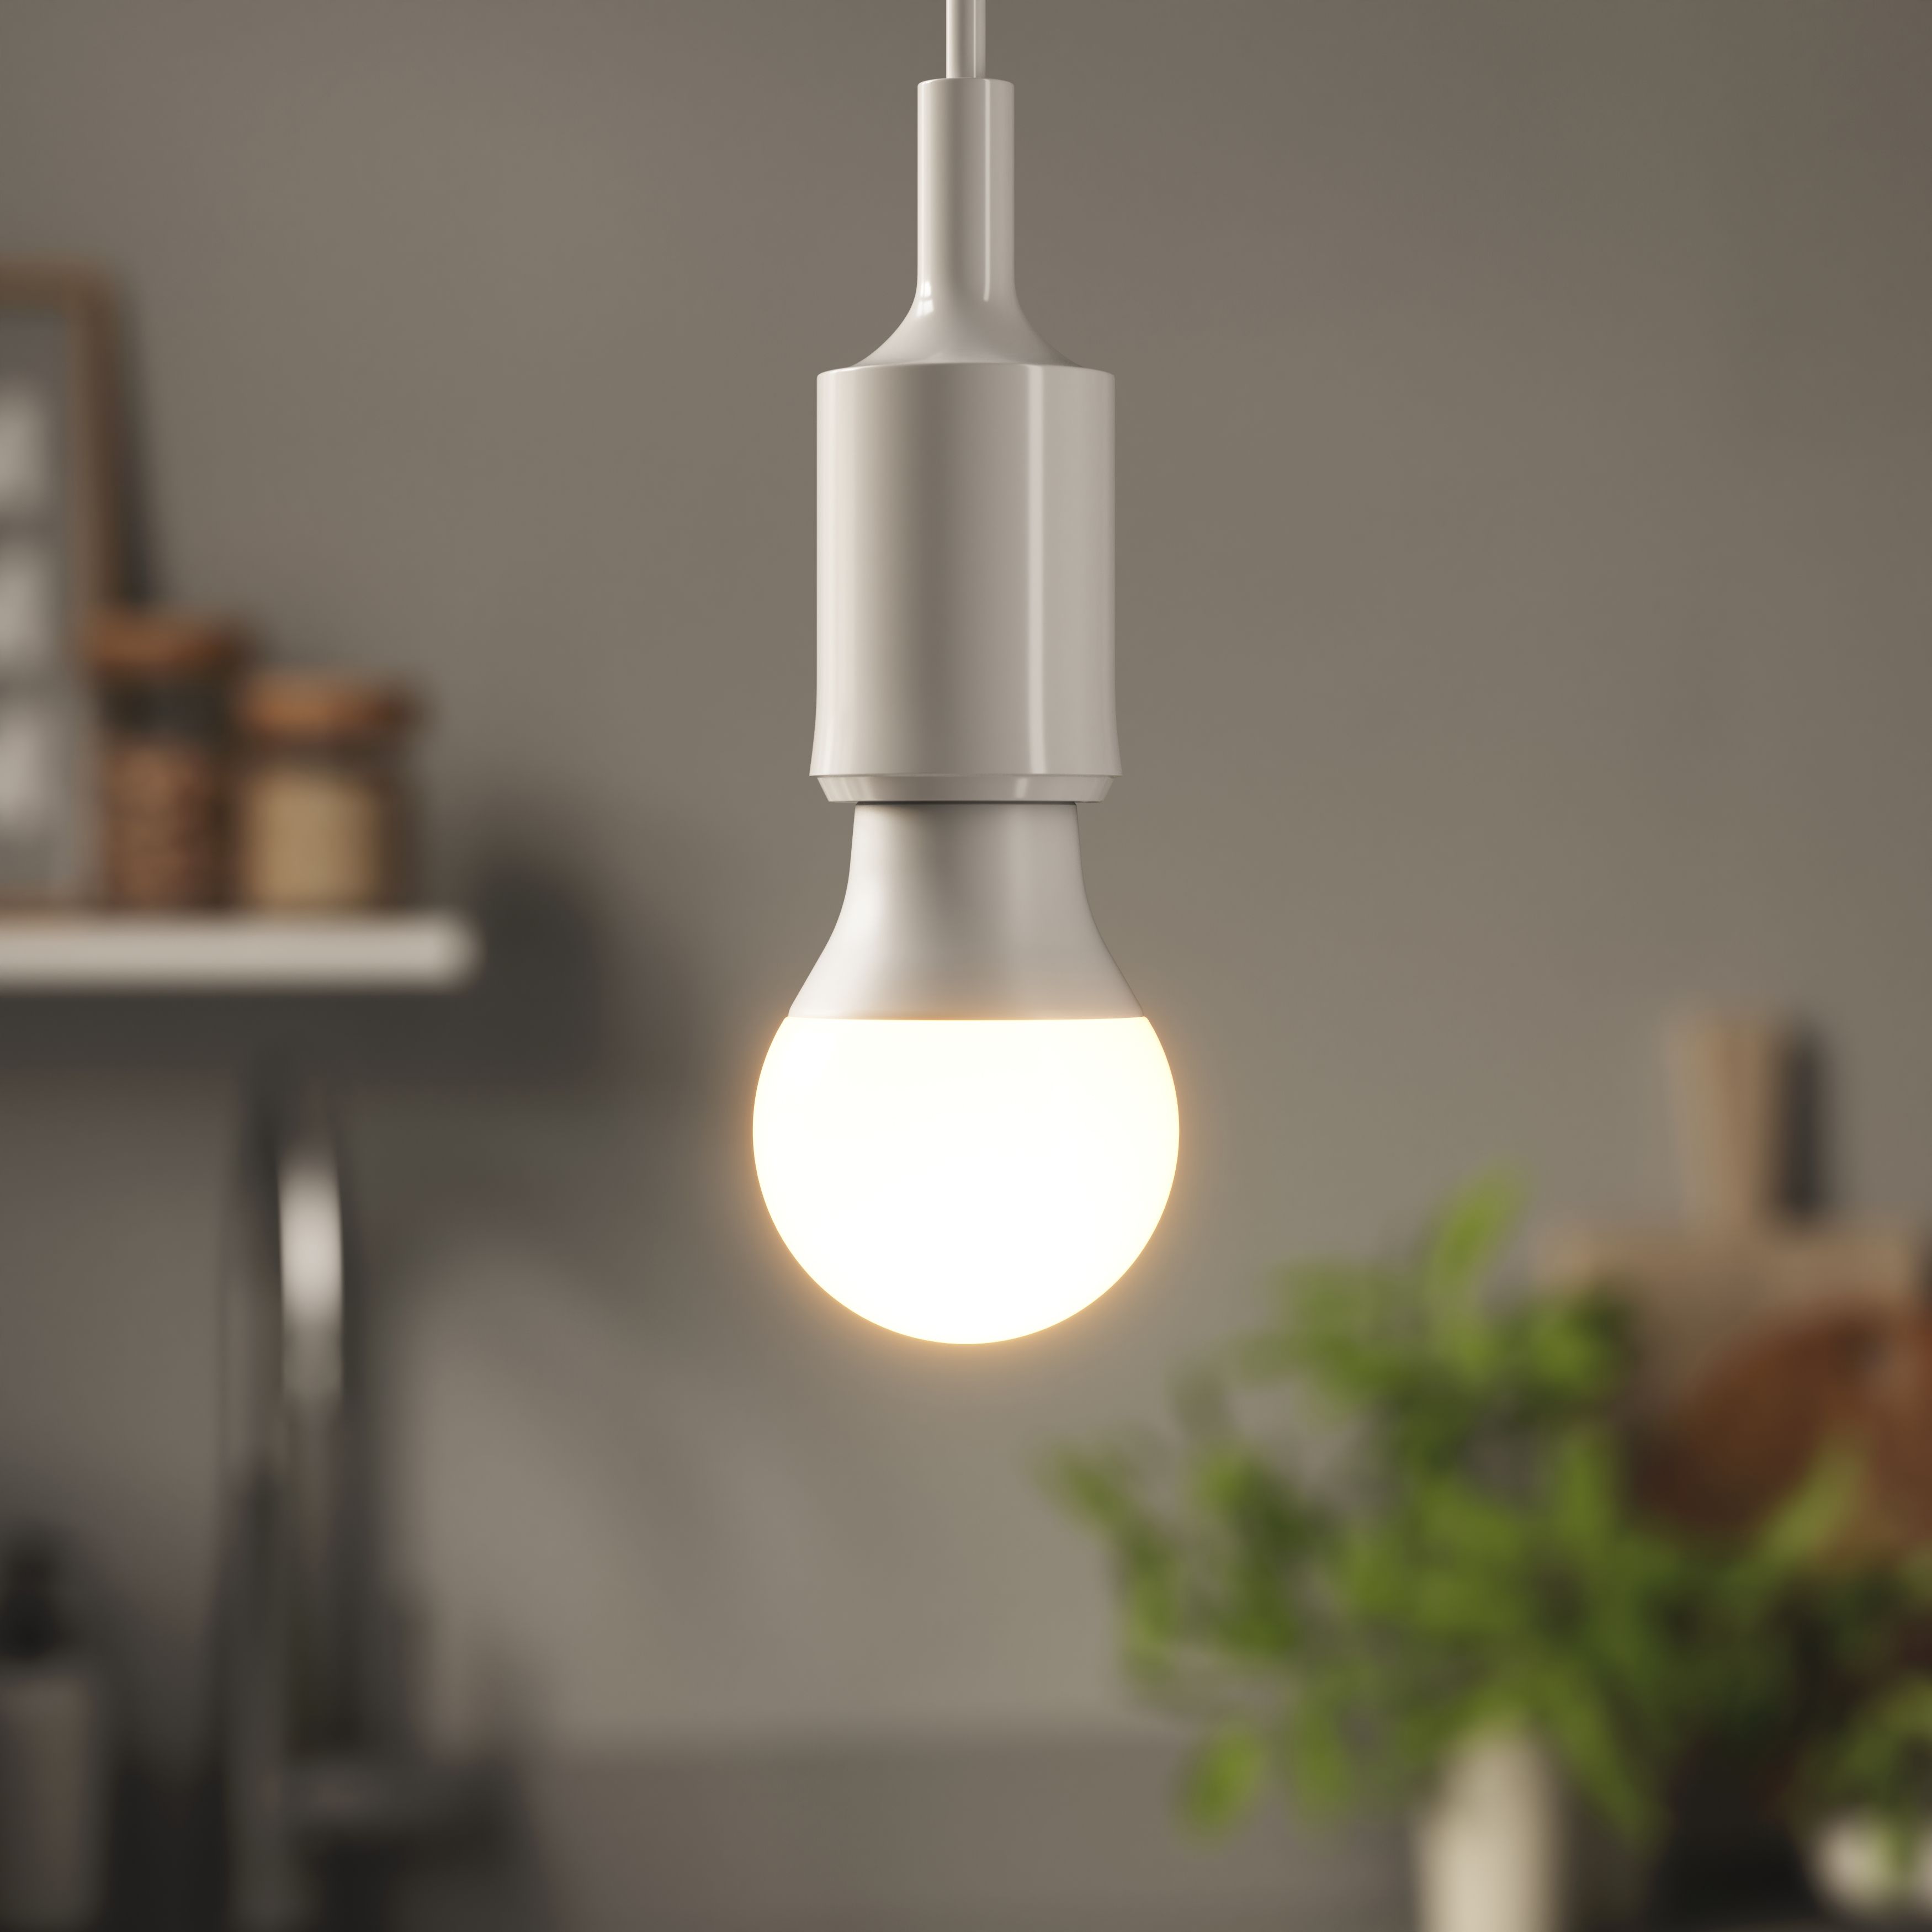 Diall E27 9.5W 1055lm White A60 Warm white LED Light bulb